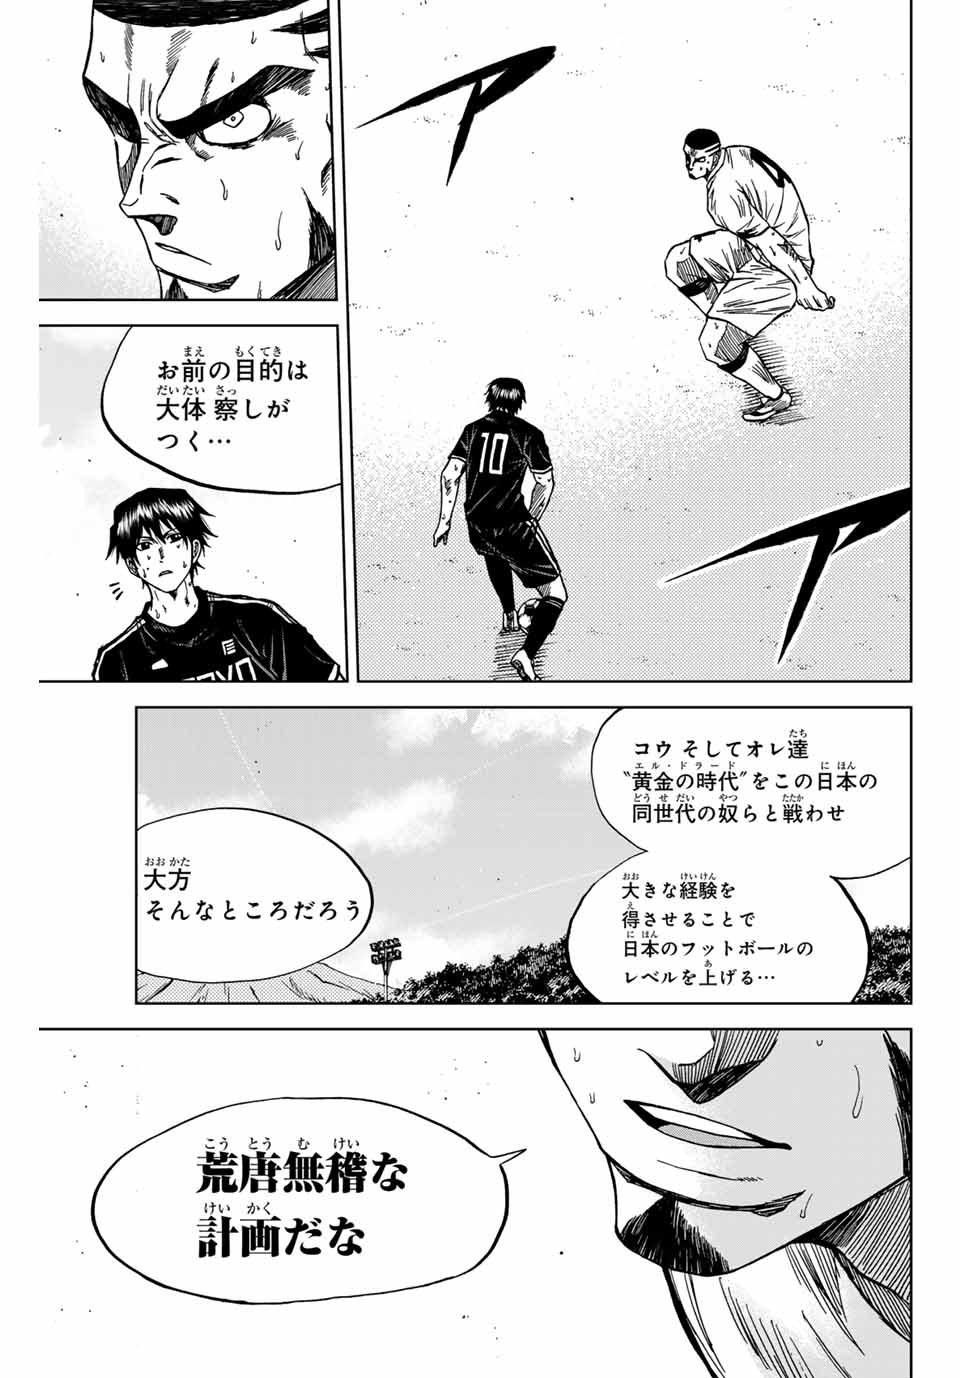 Aoku Somero - Chapter 102 - Page 13